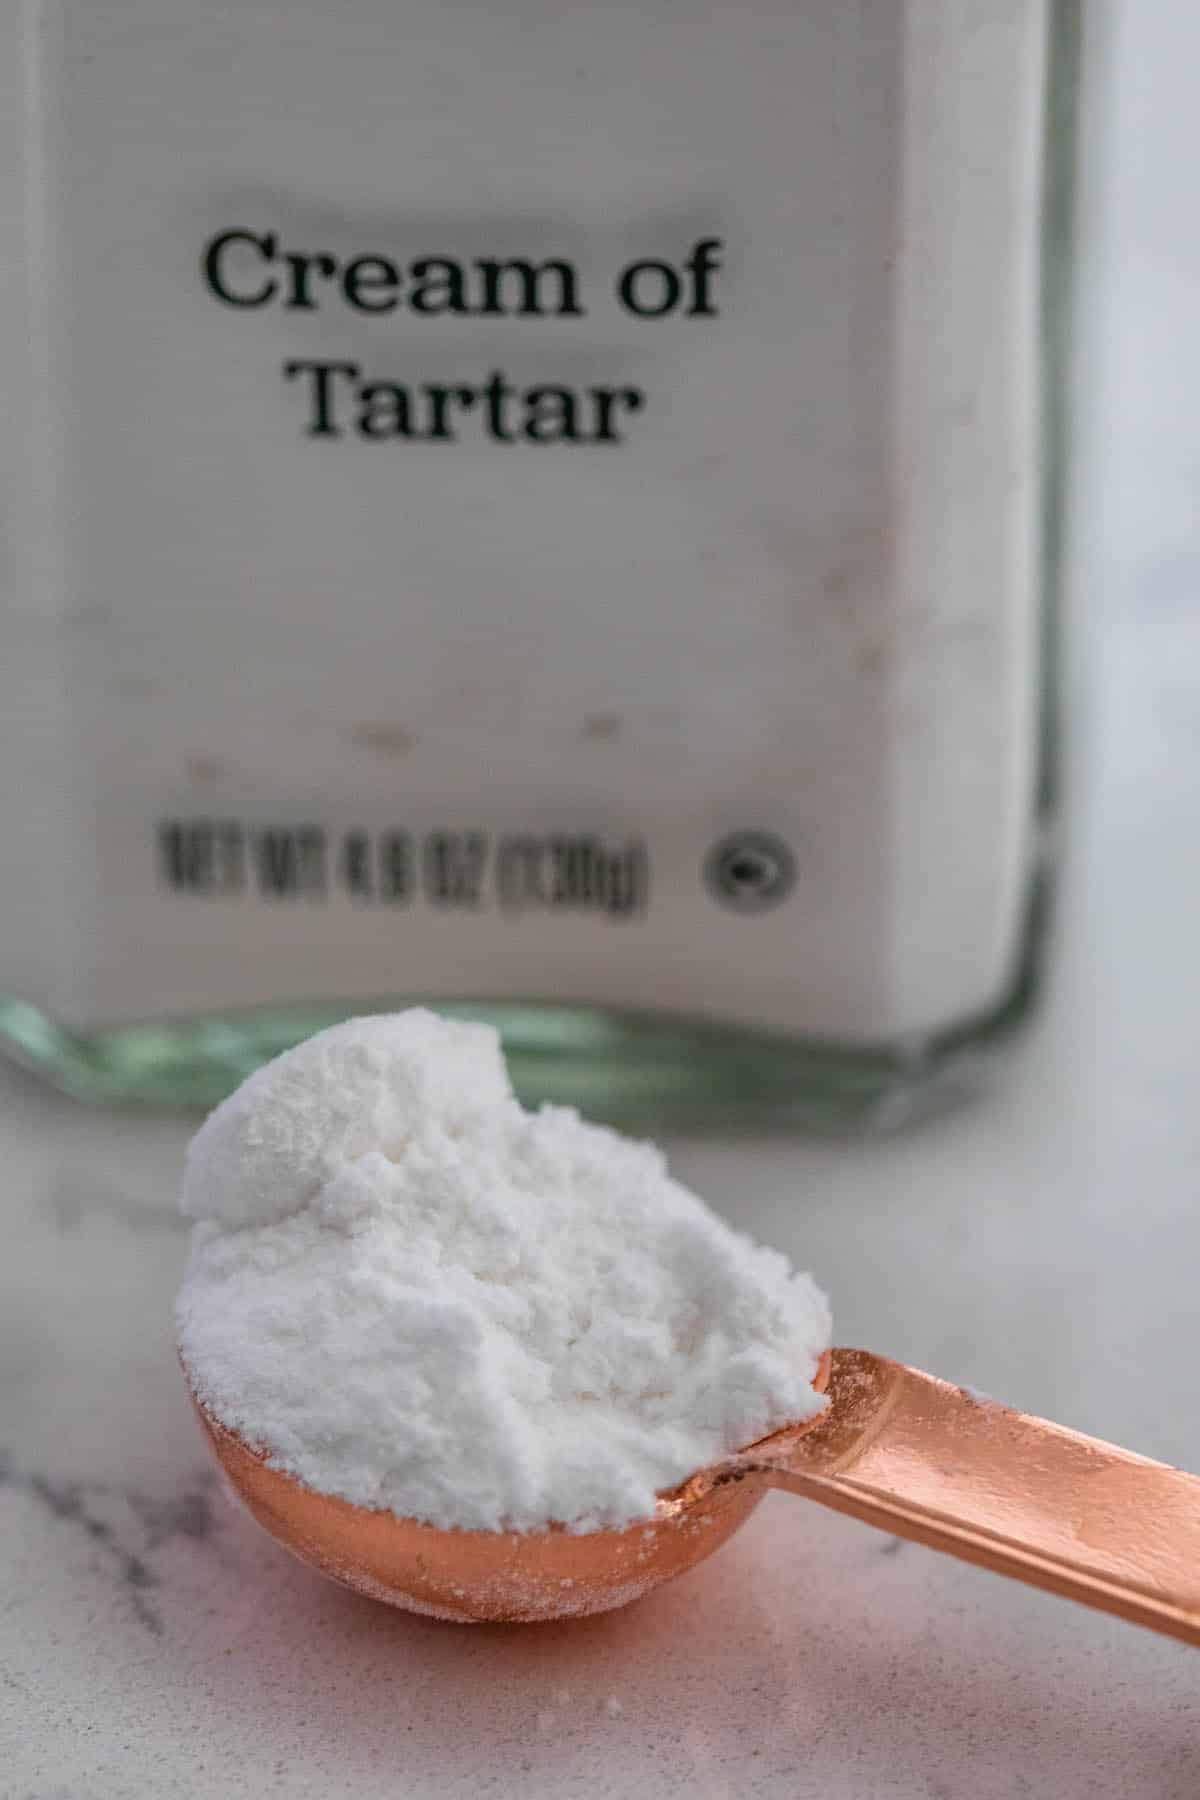 jar of cream of tartar with measuring spoon of it.